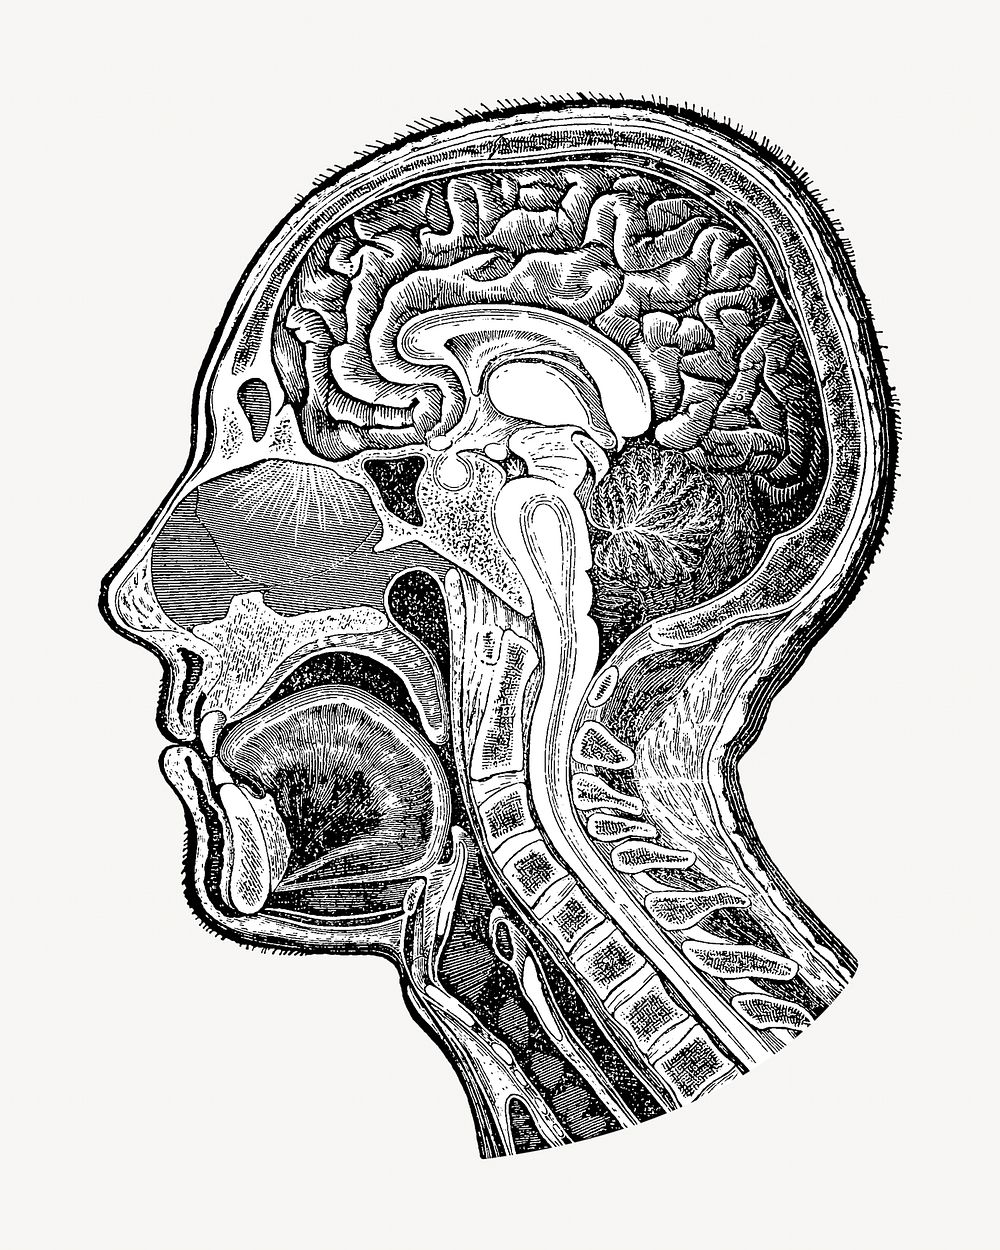 Human head anatomy, vintage medical illustration. Remixed by rawpixel.